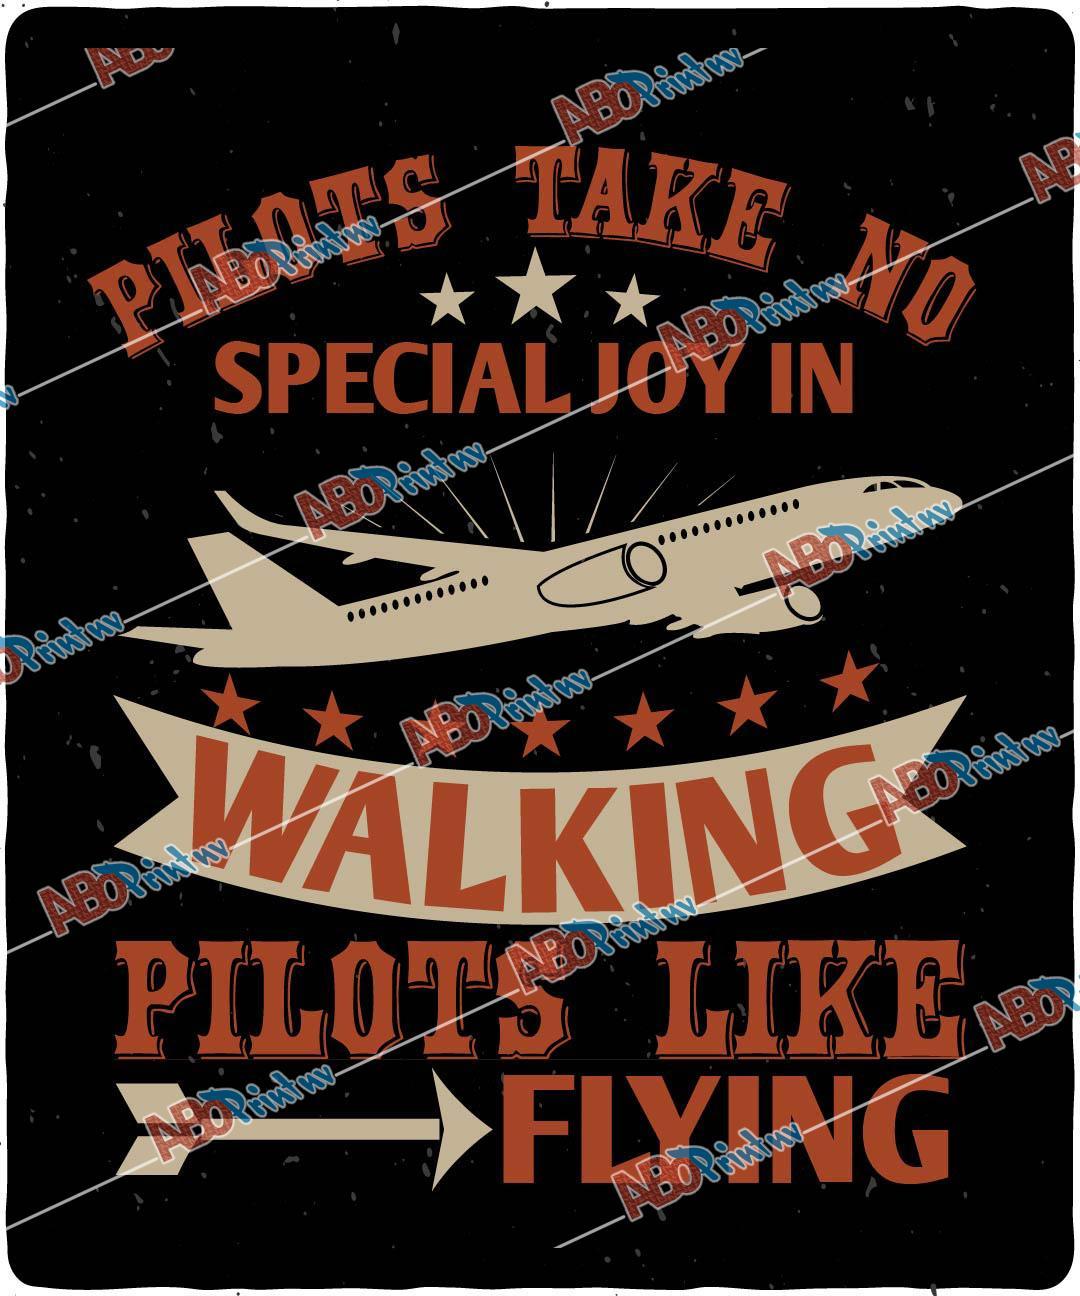 Pilots take no special joy in walking. Pilots like flying